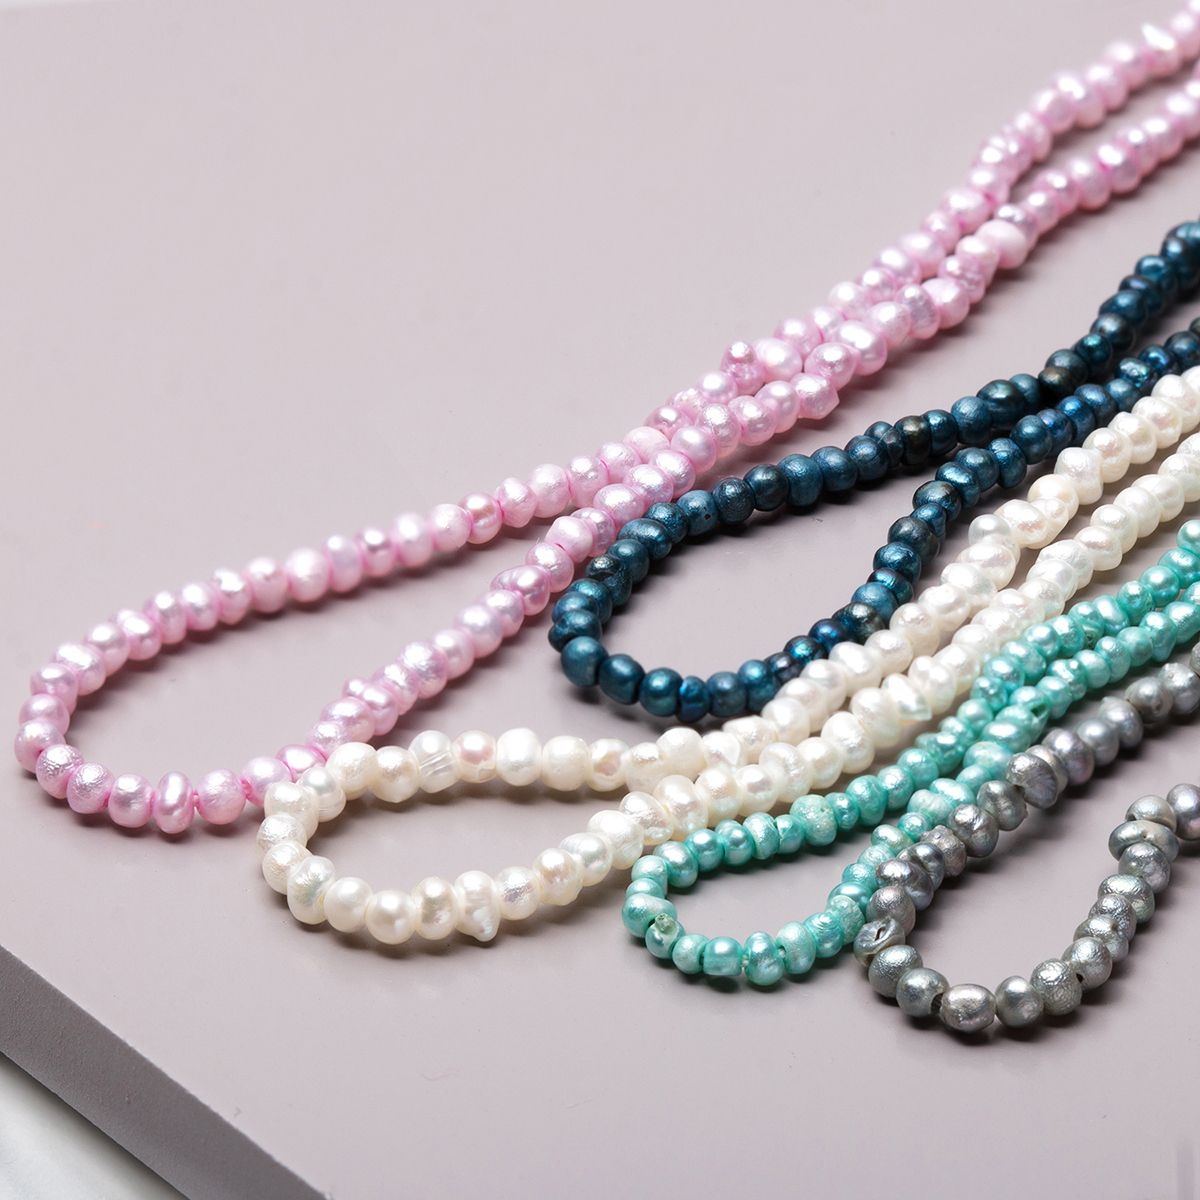  COHEALI 20pcs Crystal Stone Beads Gemstone Beads Donut Pendant  Bead Macrame Beads with Large Holes Spacer Beads Charm Gemstone Making  Beads Self Made Beads : Arts, Crafts & Sewing